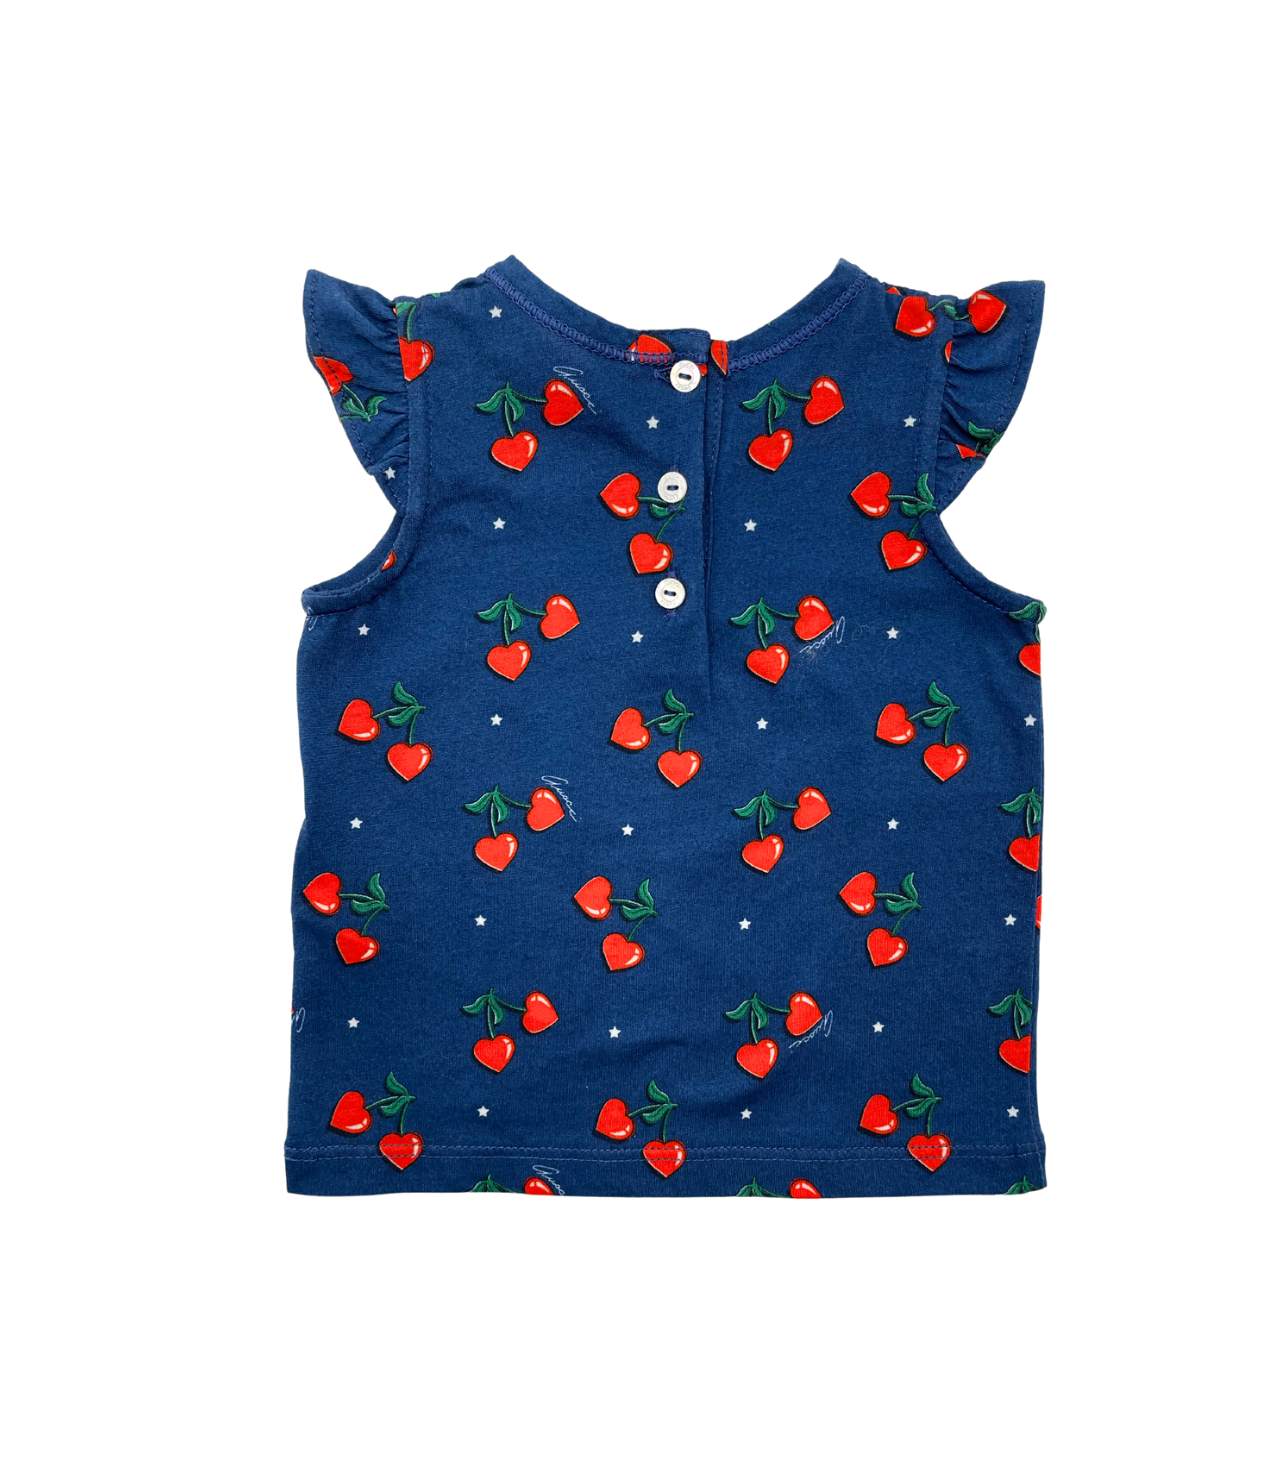 GUCCI - Cherry heart blouse - 3 months